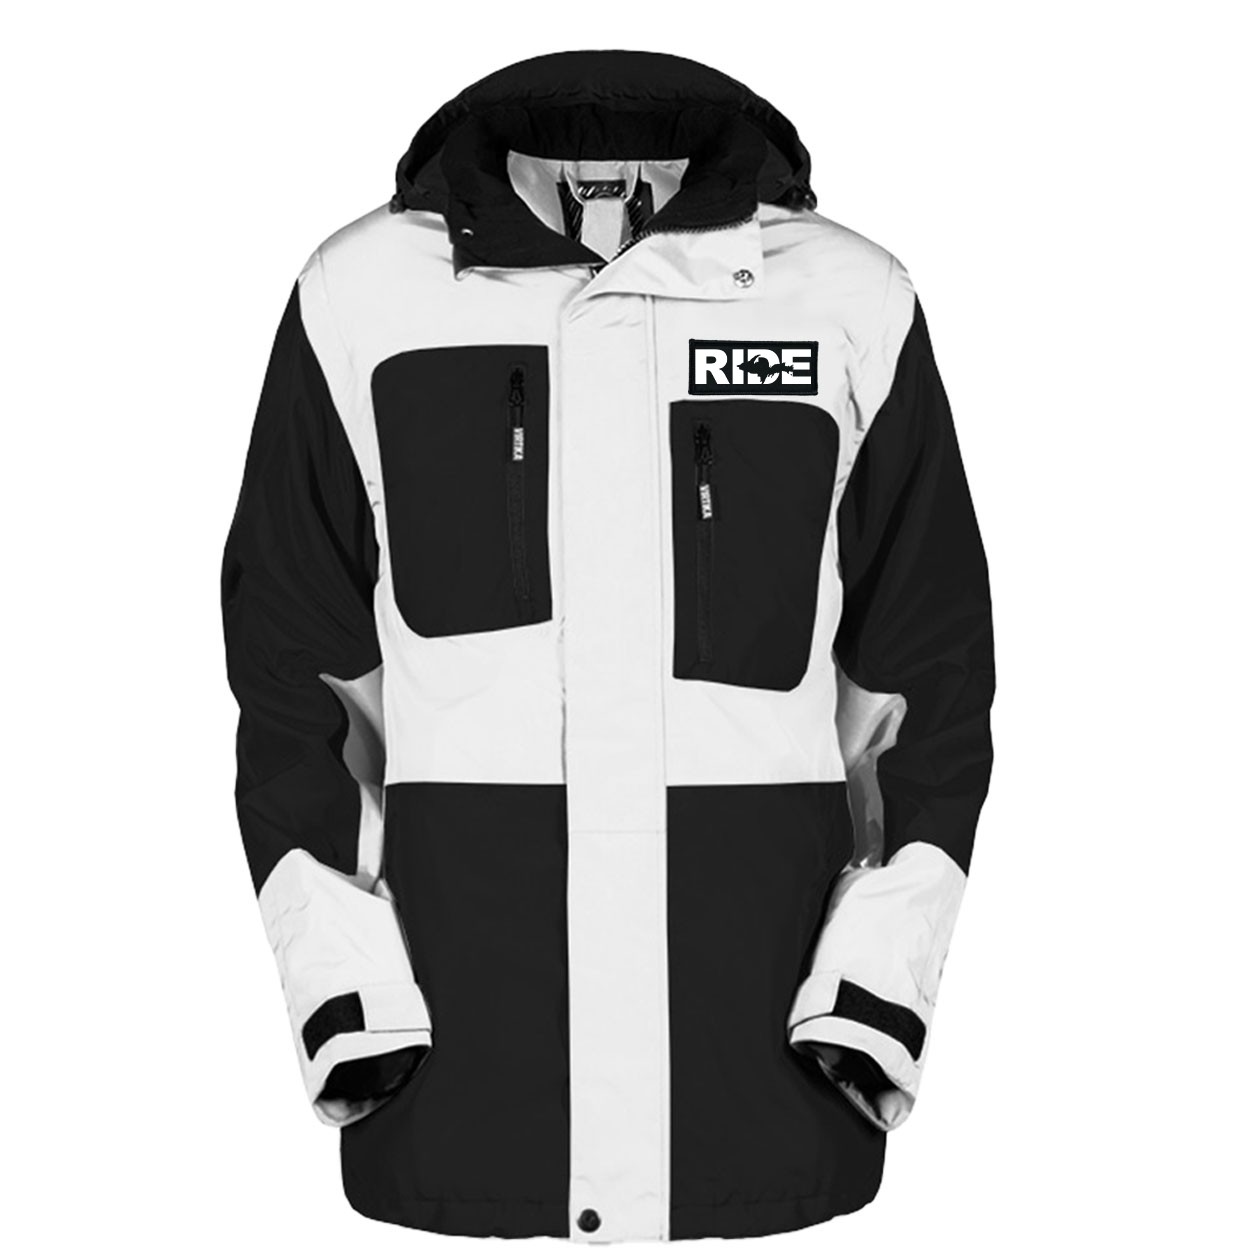 Ride Michigan UP Classic Woven Patch Pro Snowboard Jacket (Black/White)